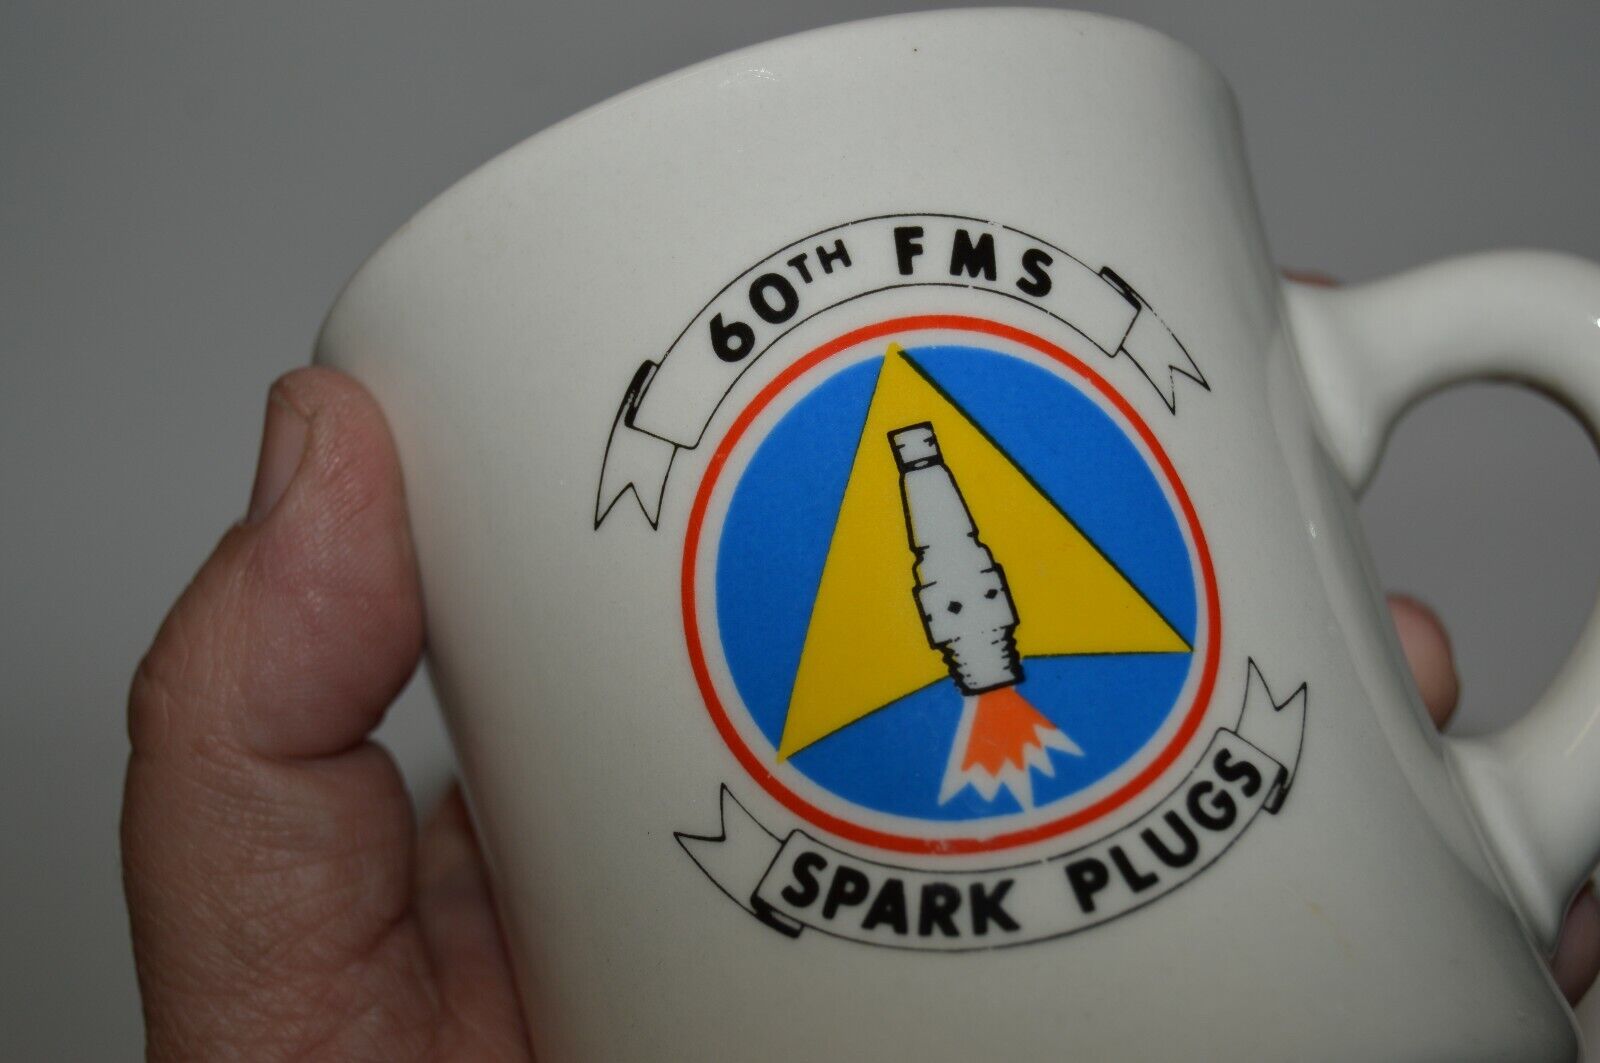 Vintage 60th FMS USAF Spark Plugs KIMBERLY Military Diner Style Coffee Mug Rare